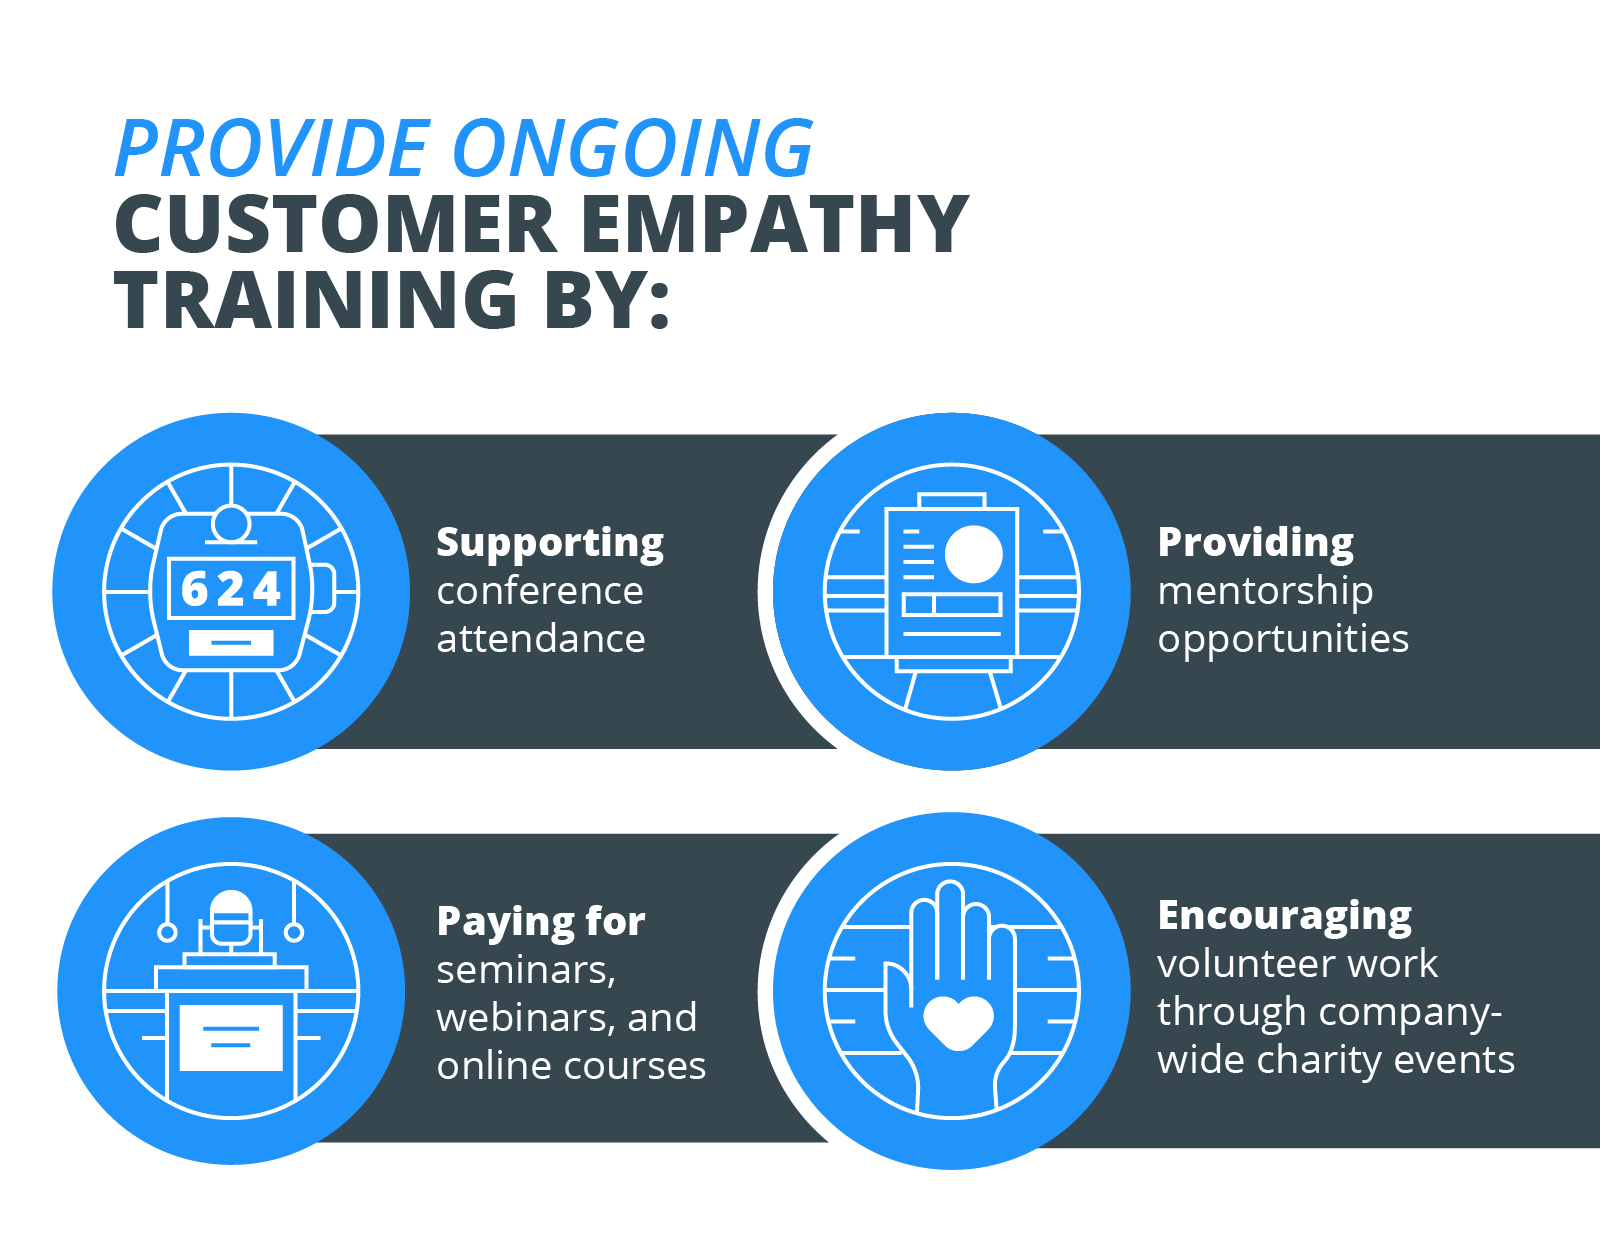 Customer empathy training